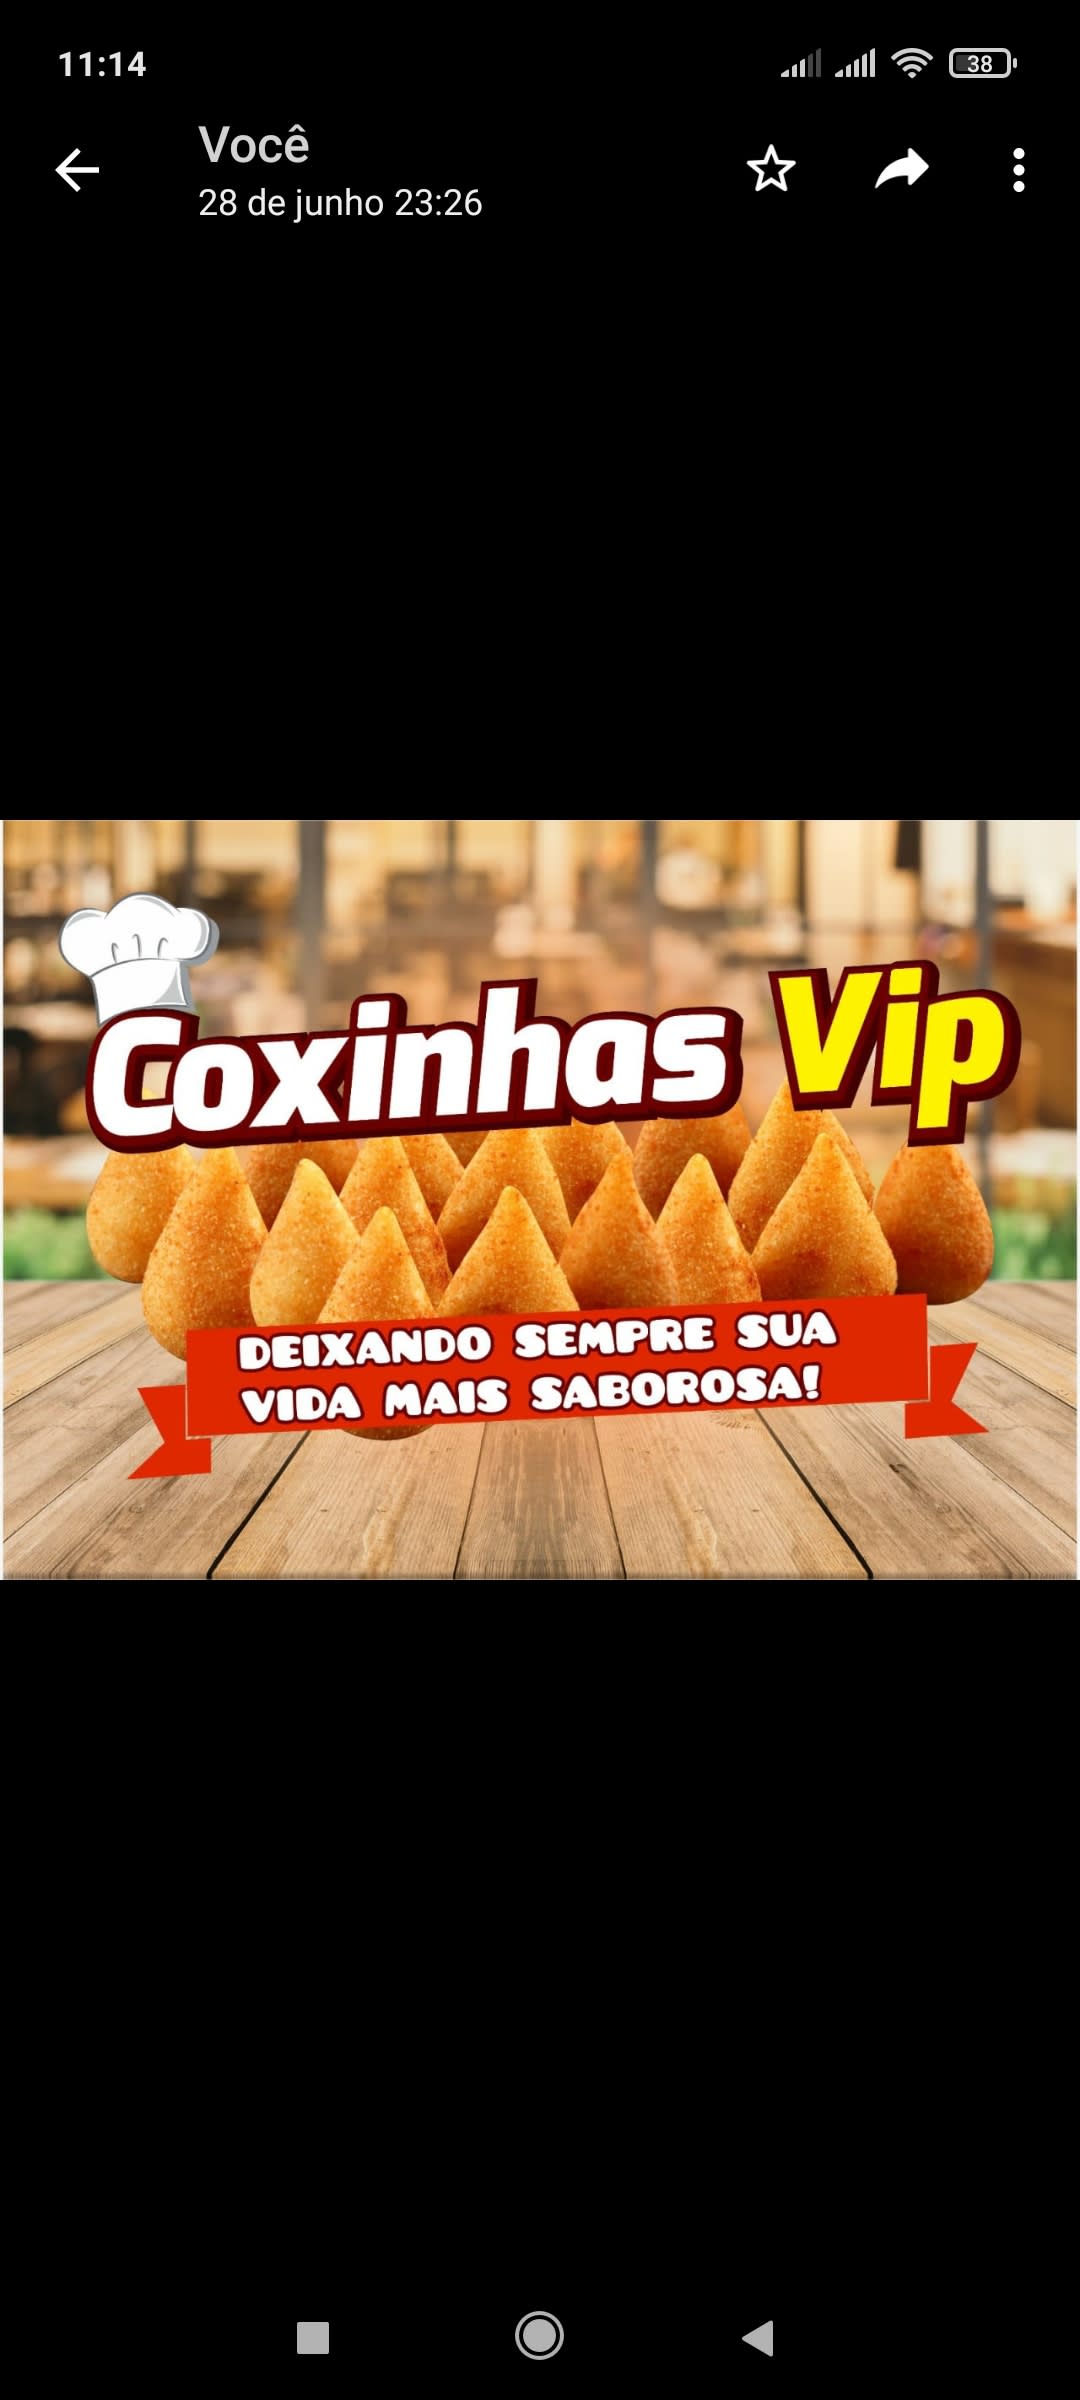 Fábrica Coxinhas Vip